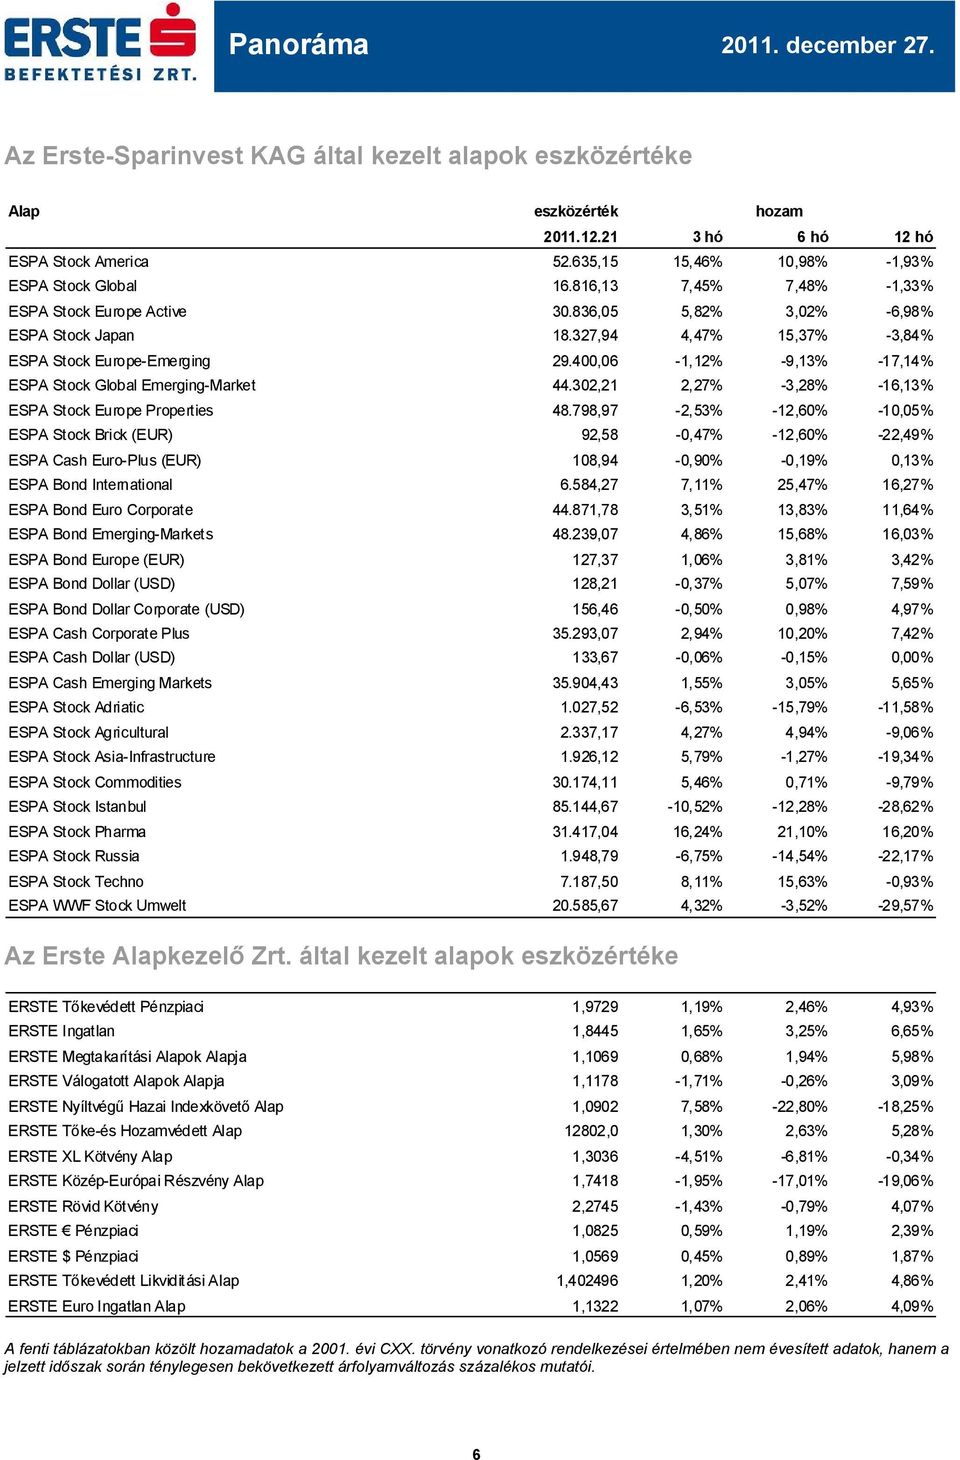 4,06-1,12% -9,13% -17,14% ESPA Stock Global Emerging-Market 44.302,21 2,27% -3,28% -16,13% ESPA Stock Europe Properties 48.